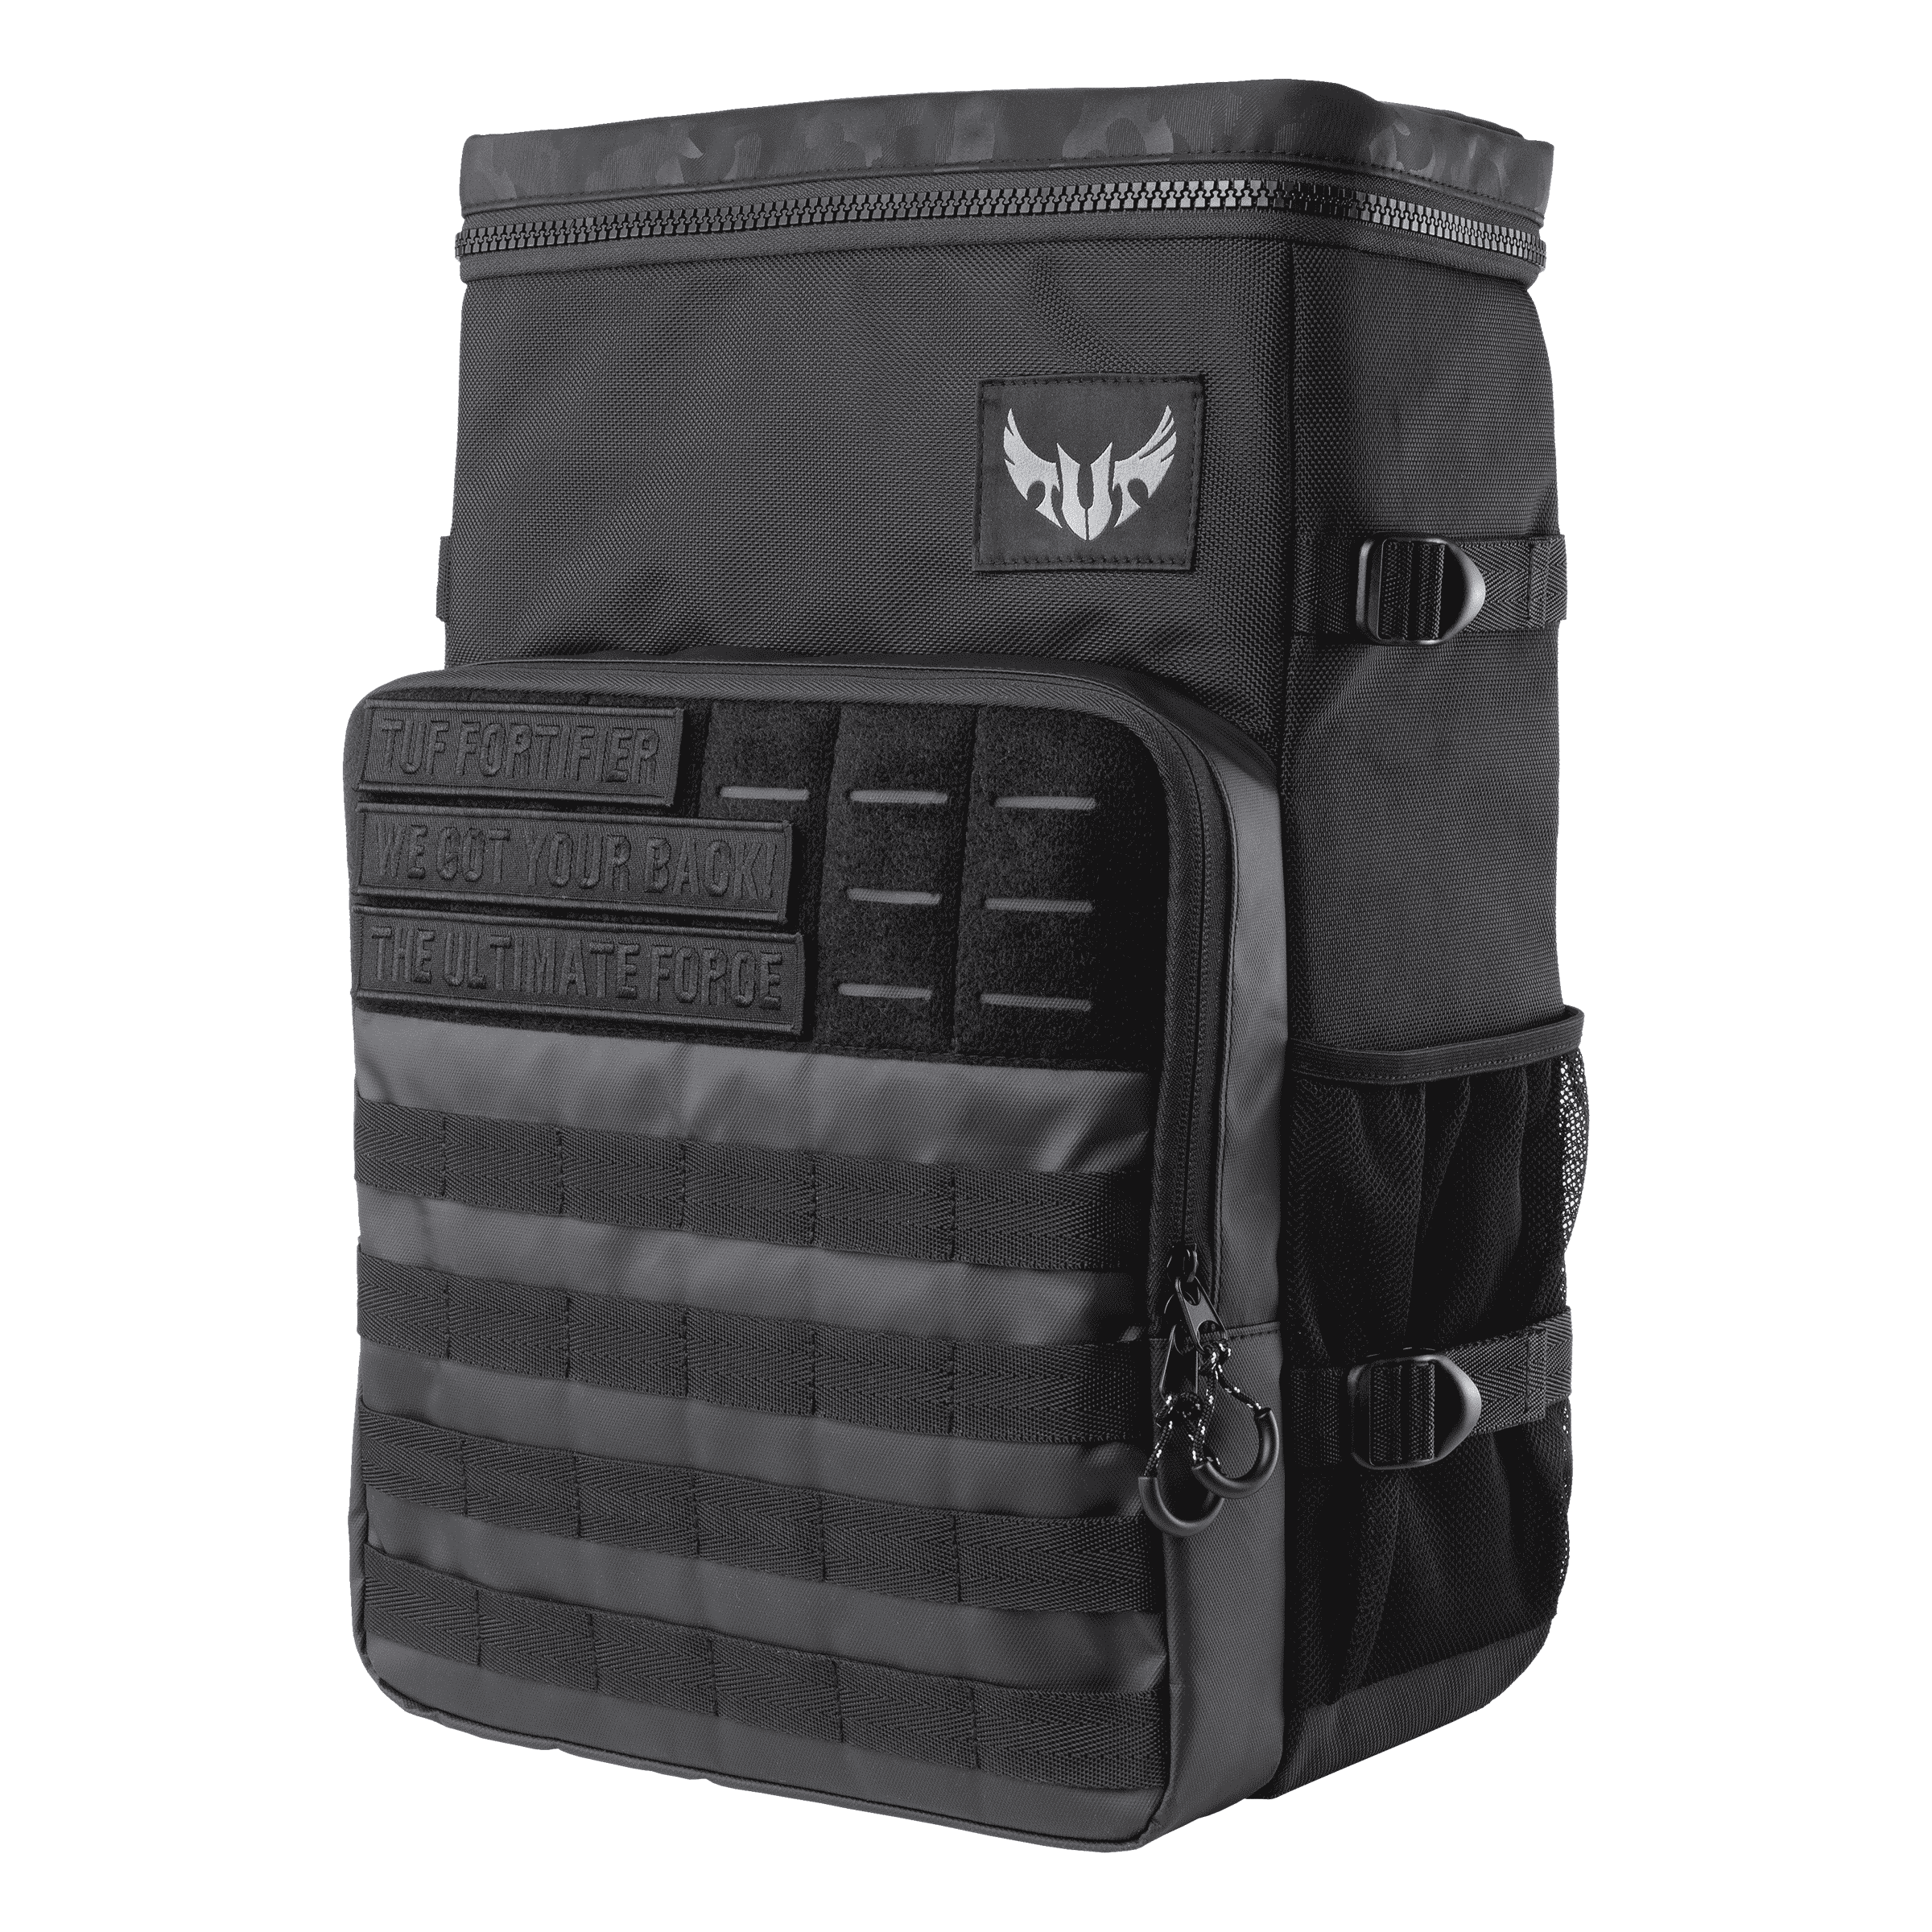 Okkernoot Post Mantel TUF Gaming BP2700 Backpack｜Apparel Bags and Gear｜ASUS Global